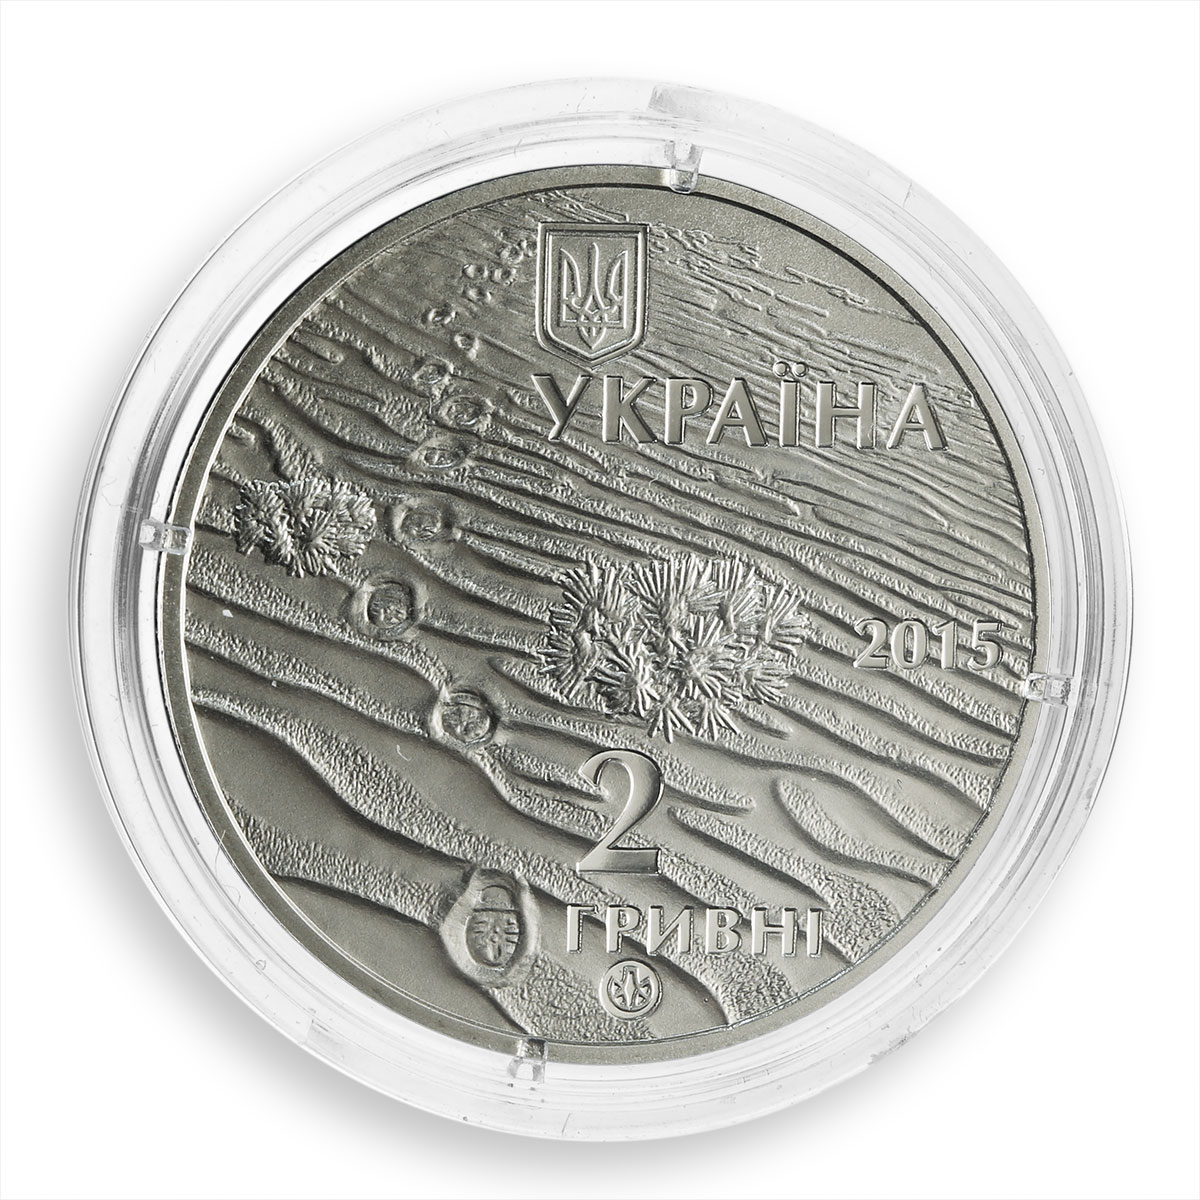 Ukraine, 2 hryvnias, OLESHKY SANDS, Lizard, Nature Park, nickel silver coin 2015